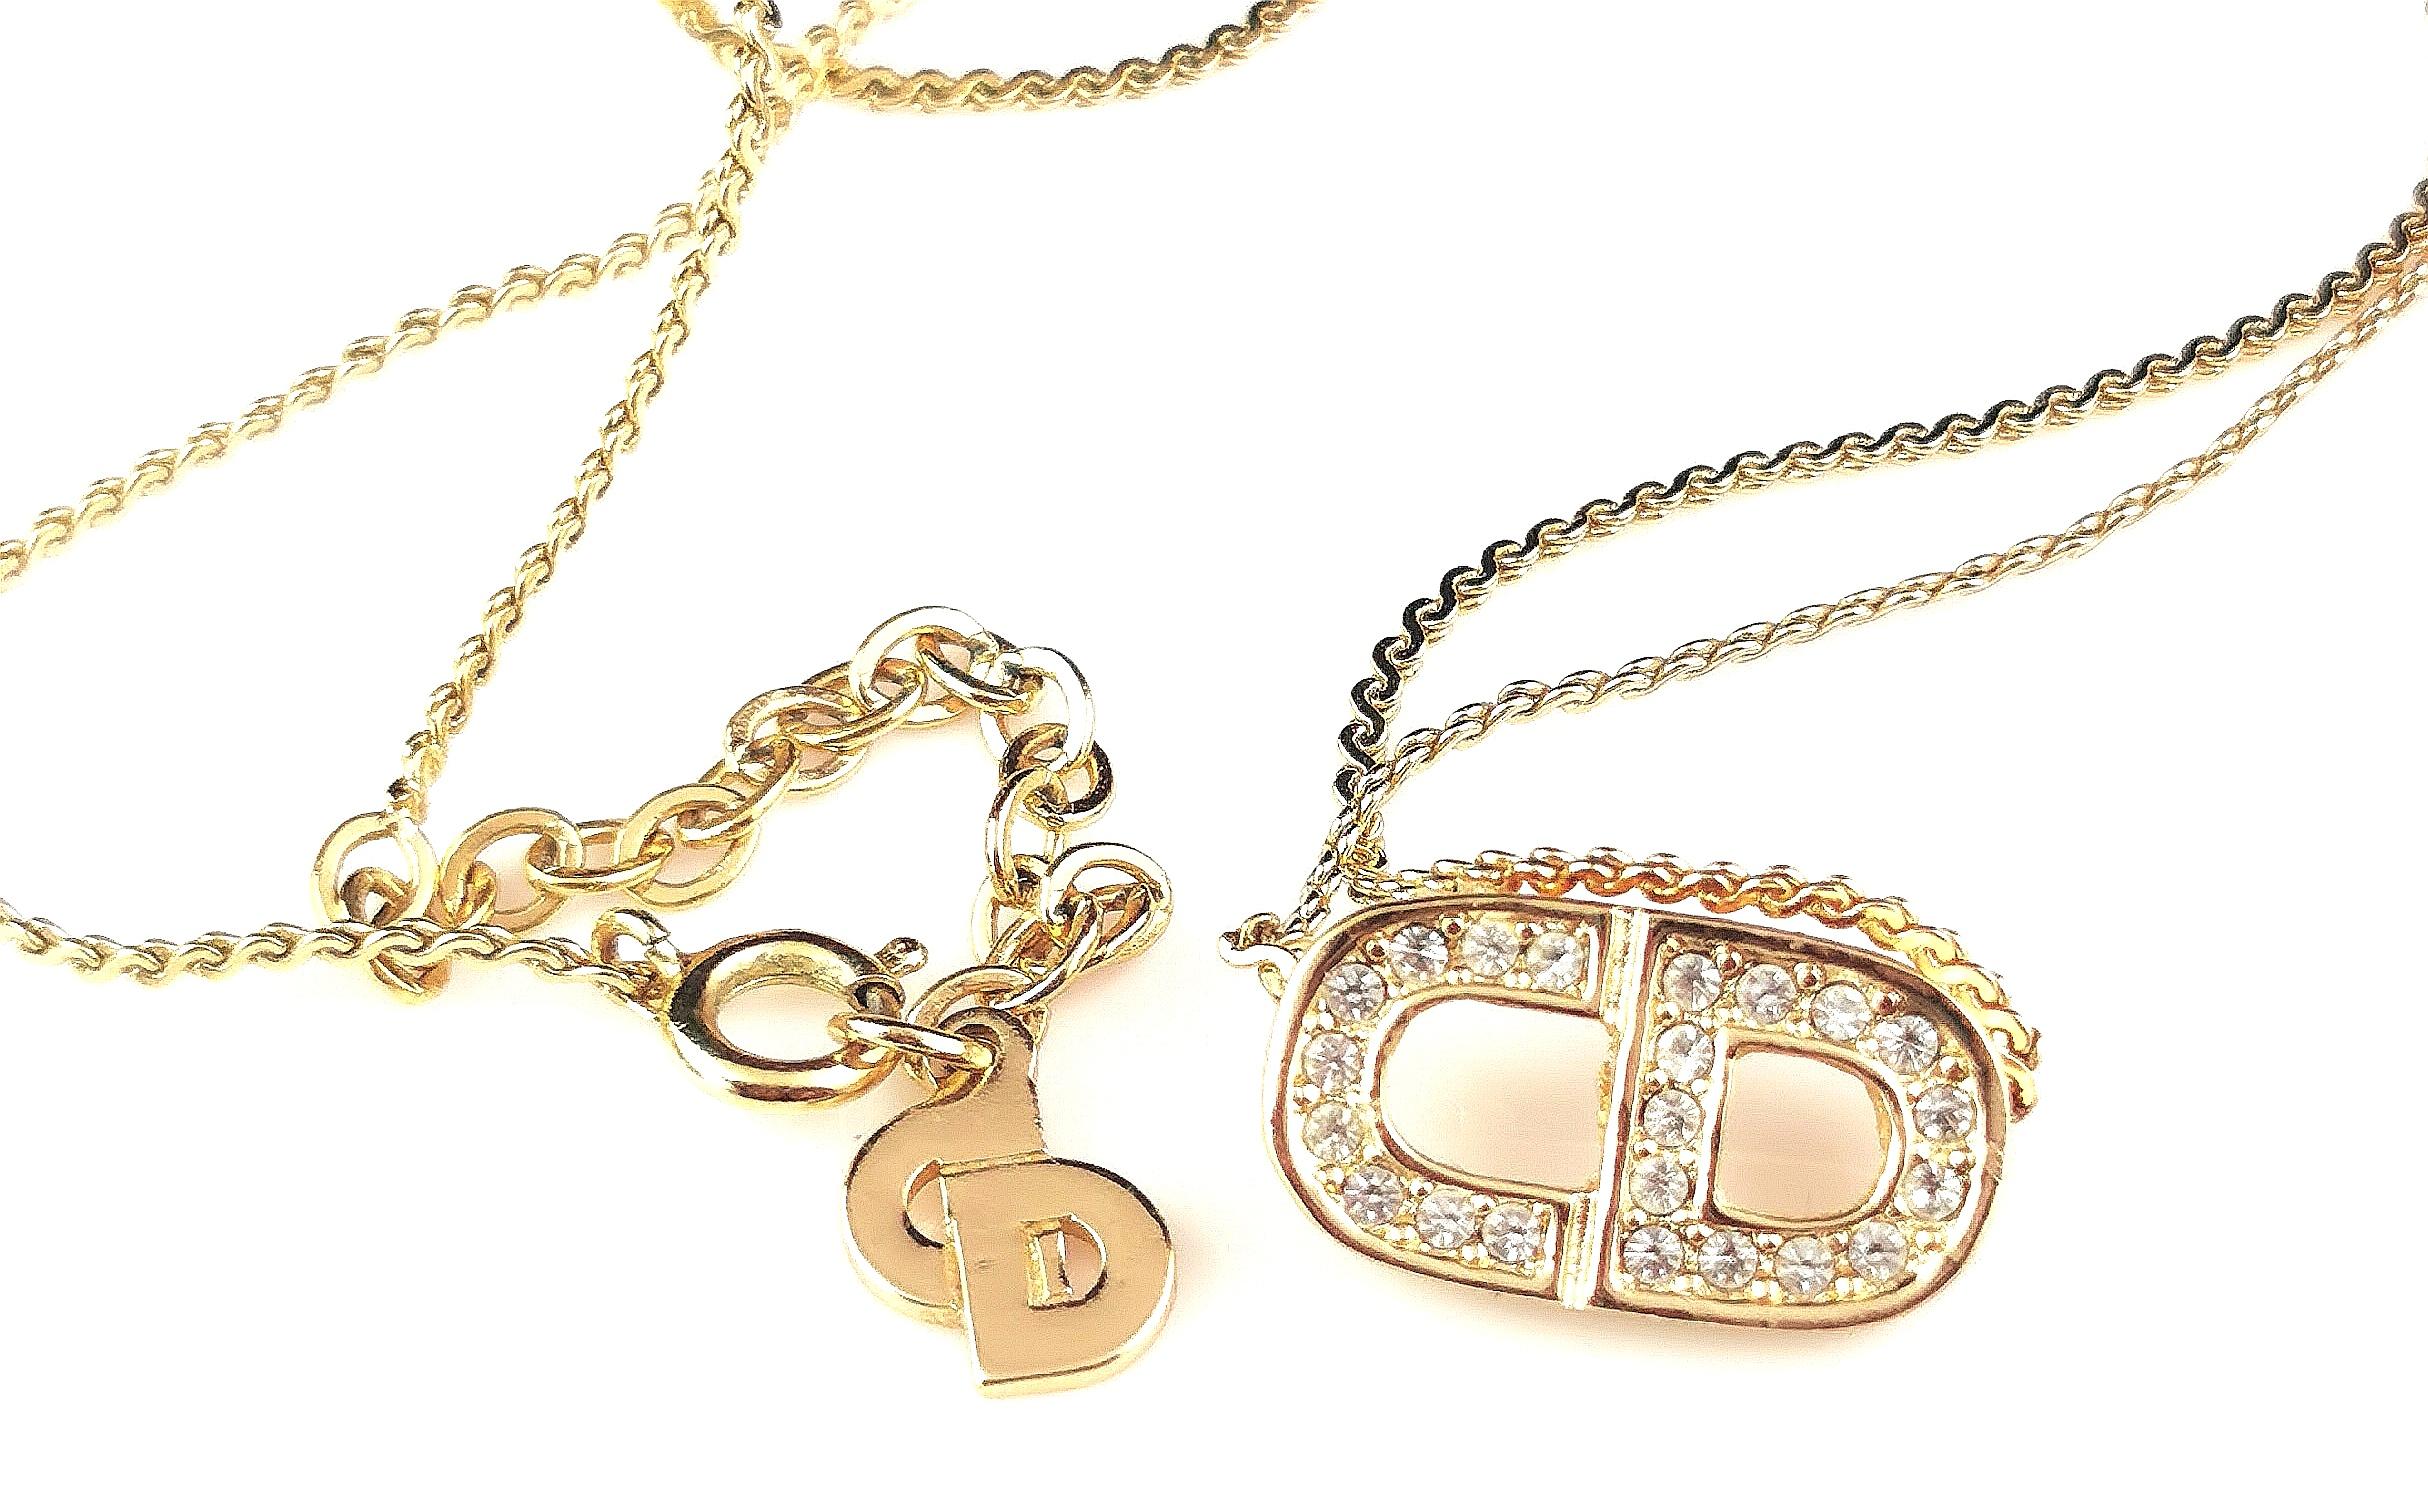  Vintage Christian Dior gold tone diamante logo pendant necklace  For Sale 1